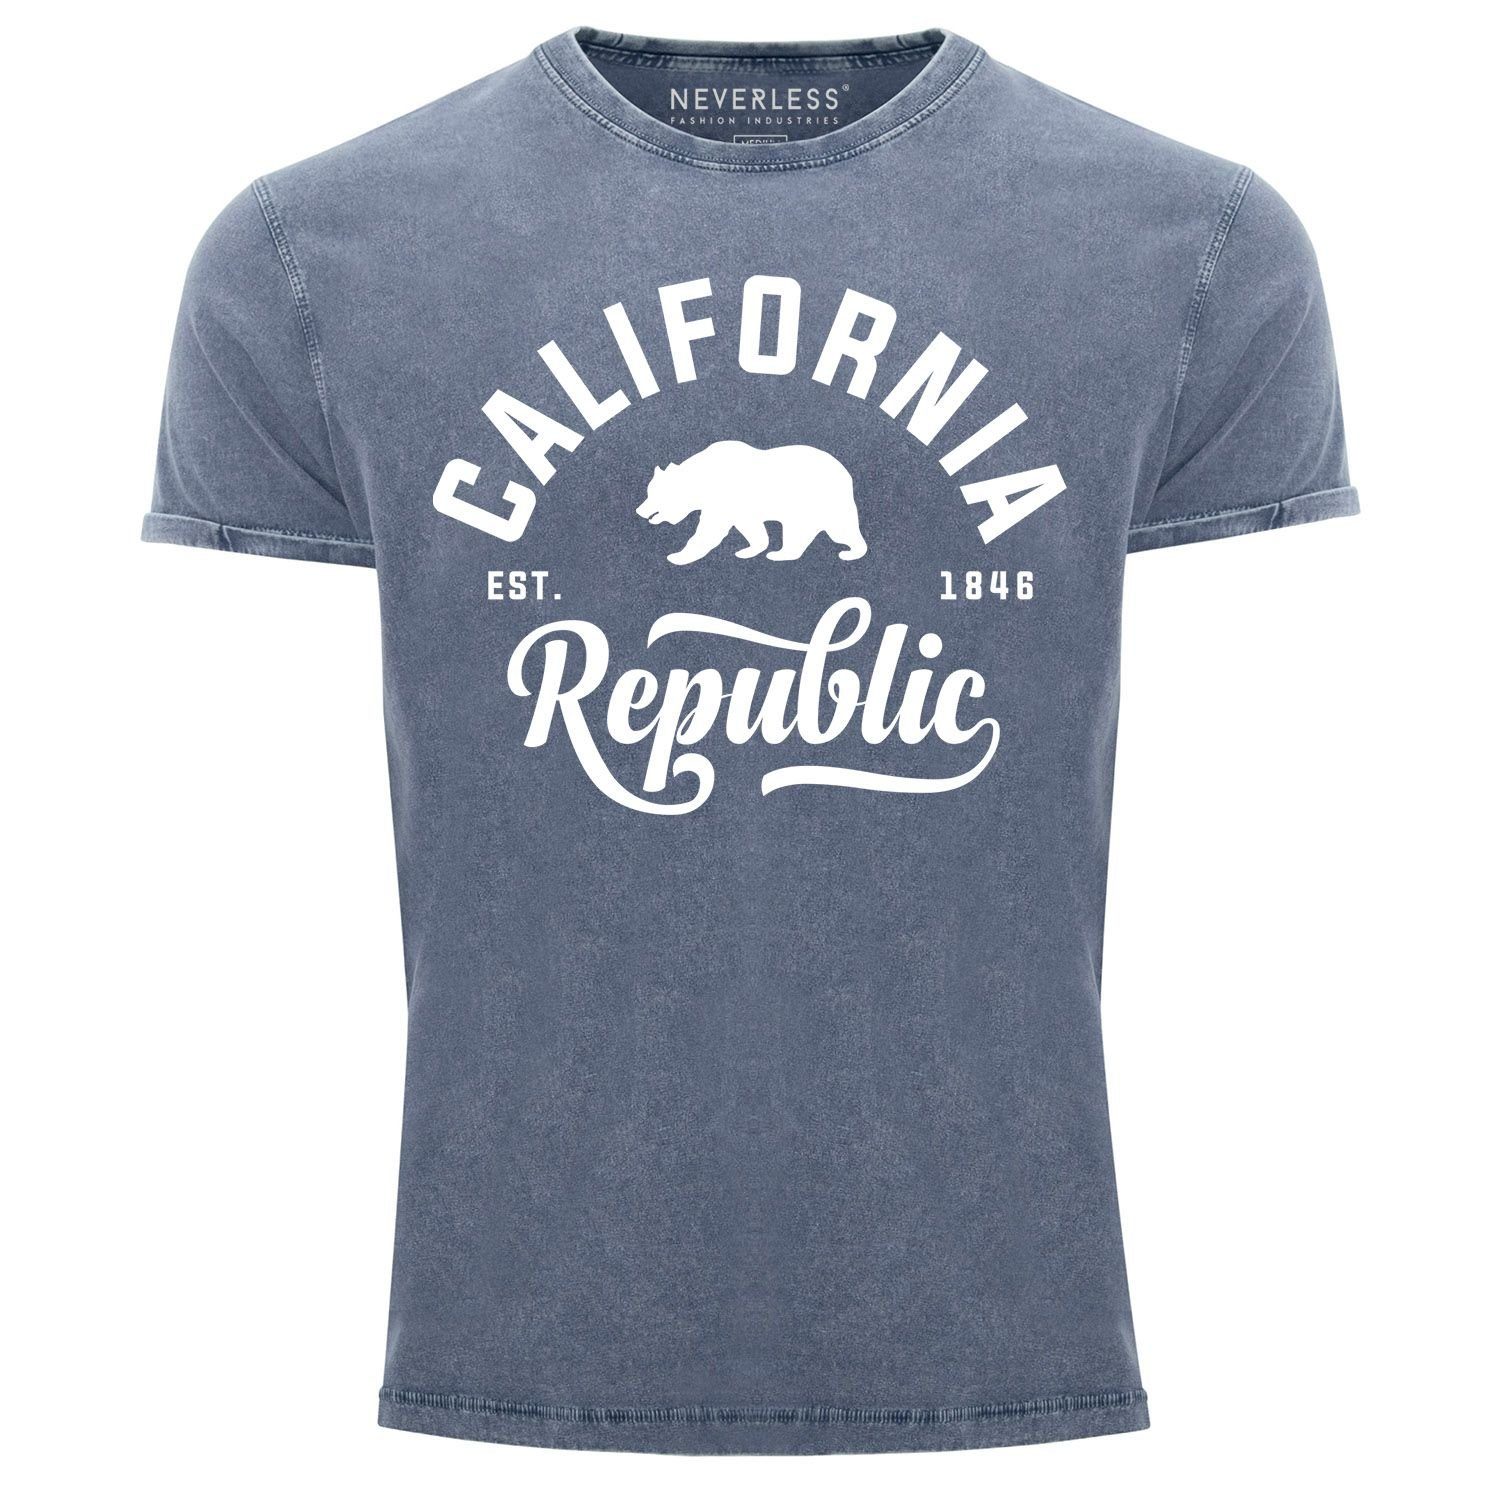 Neverless Print-Shirt Cooles Angesagtes Herren T-Shirt Vintage Shirt California Republic Bär Aufdruck Used Look Slim Fit Neverless® mit Print blau